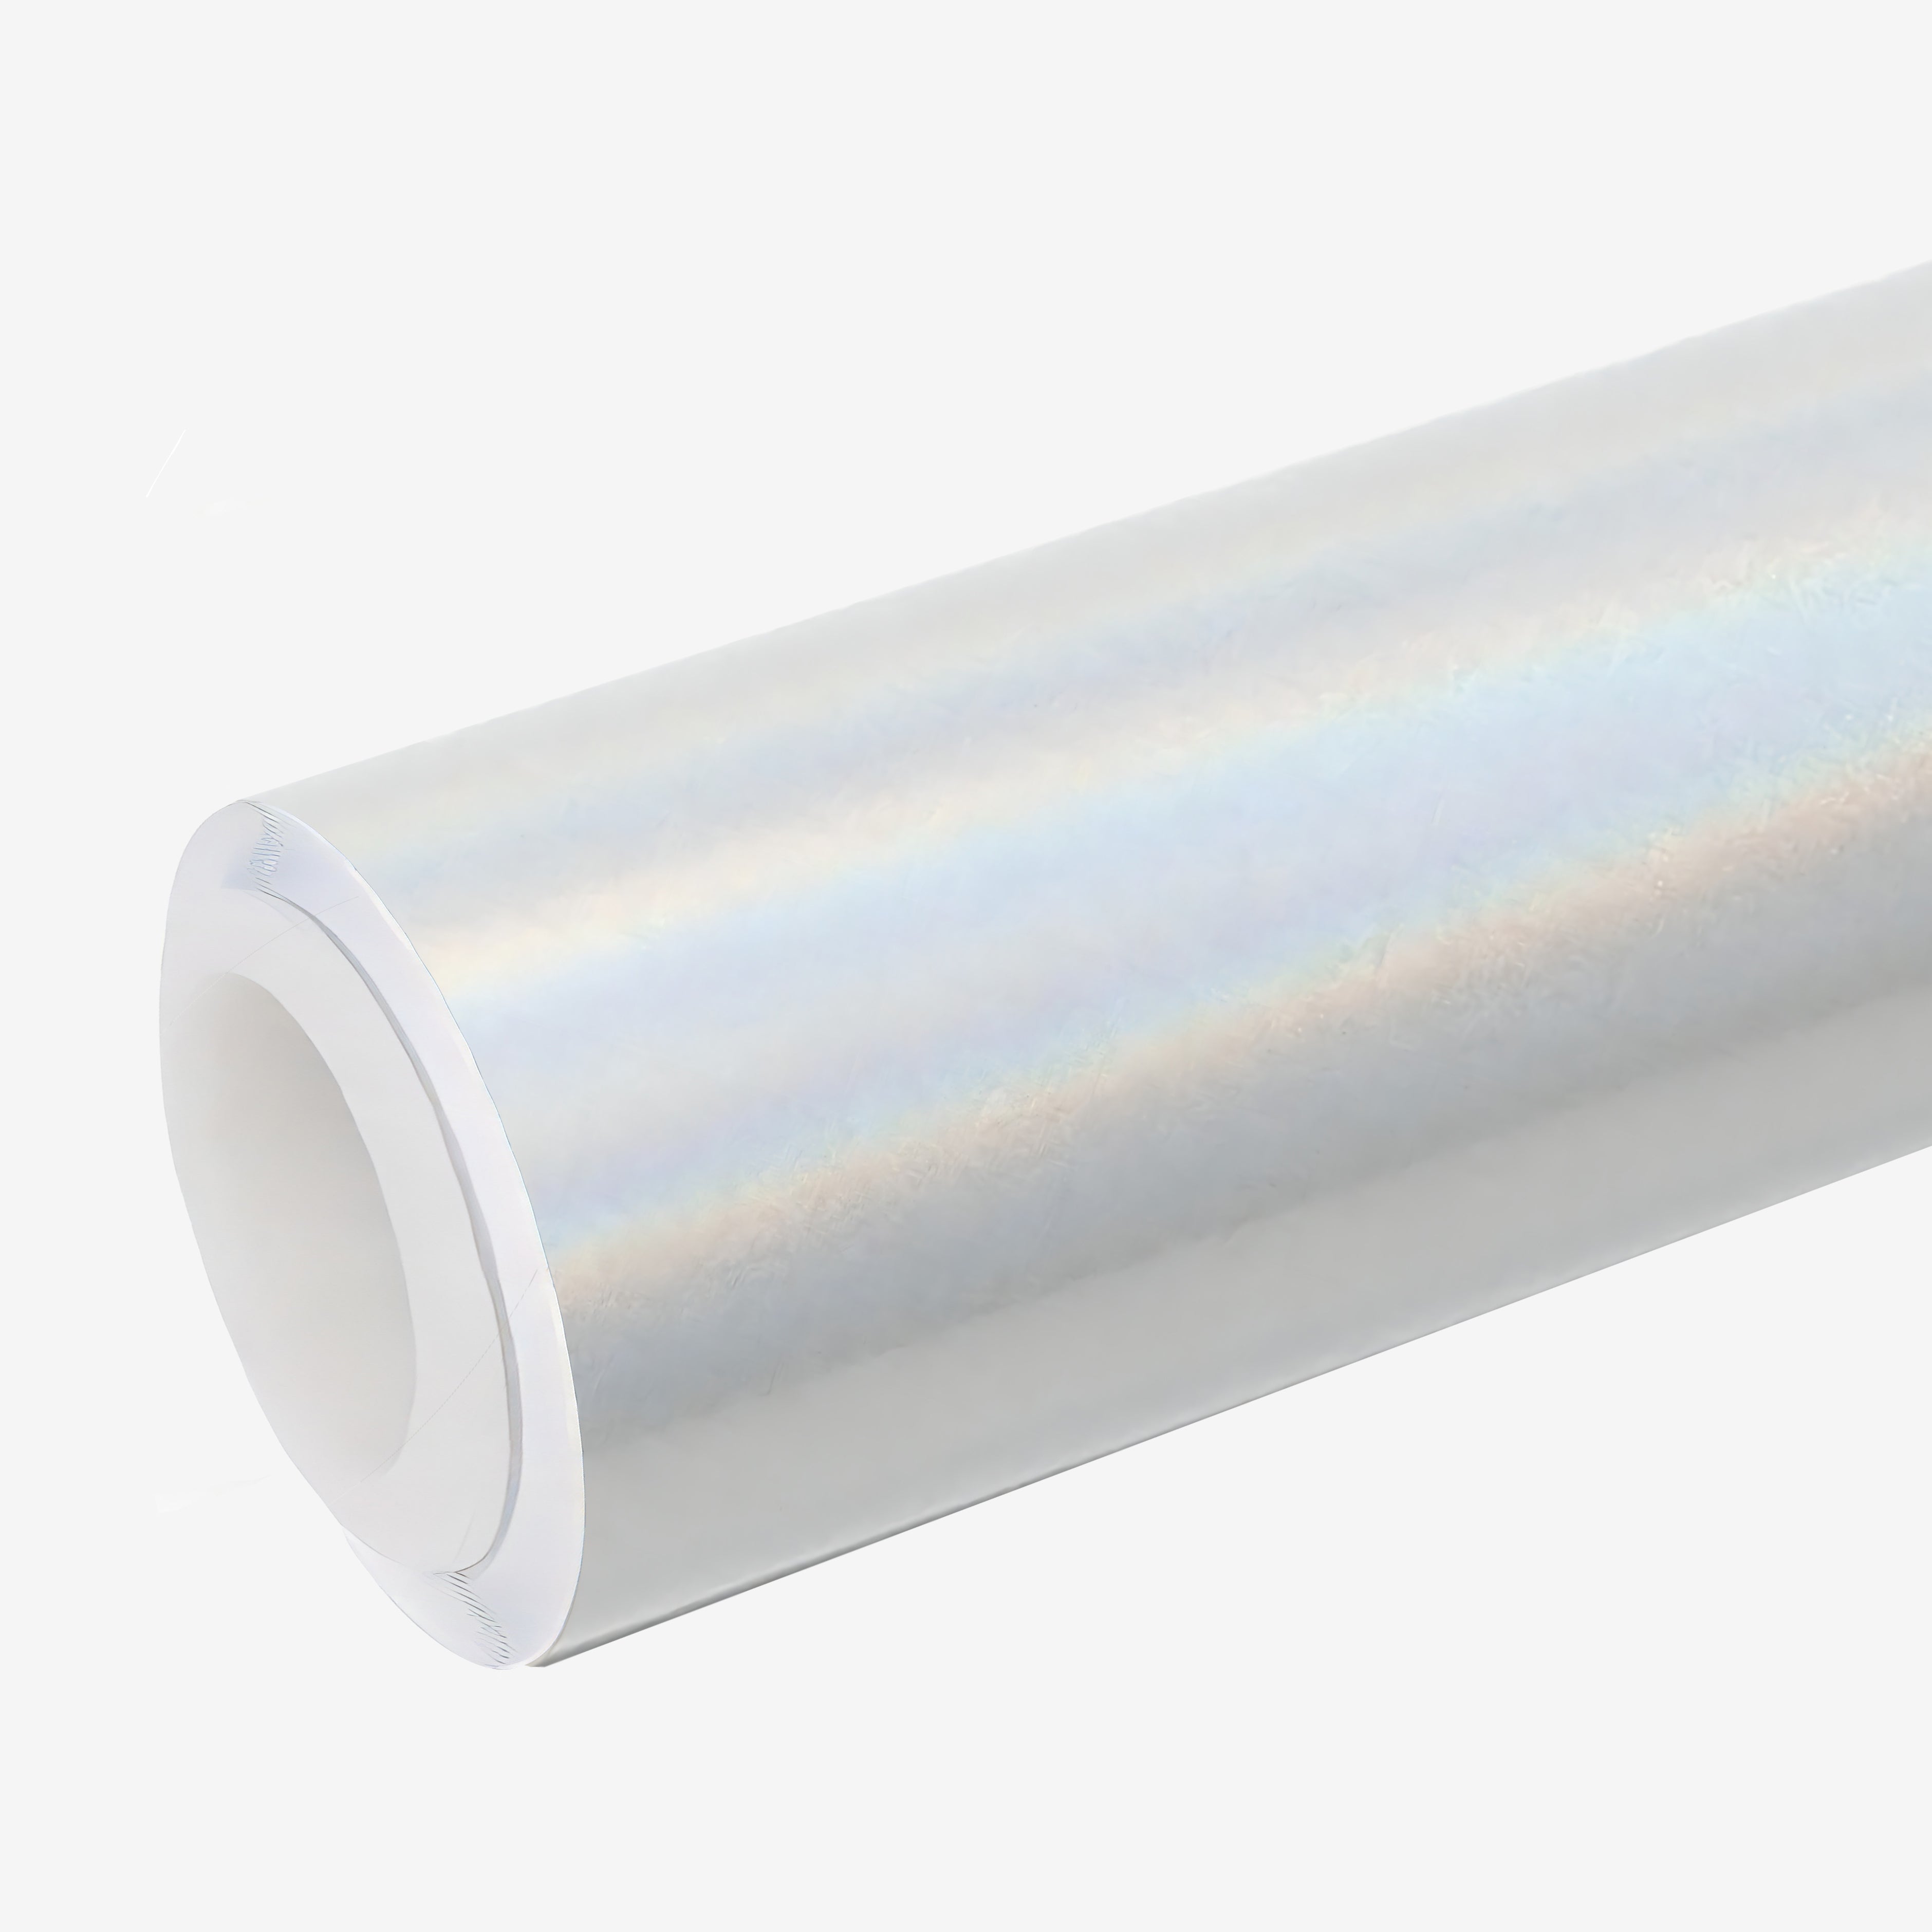 Best Nascarwraps Rainbow Laser White Color To Iridescent Gloss Vinyl Wrap